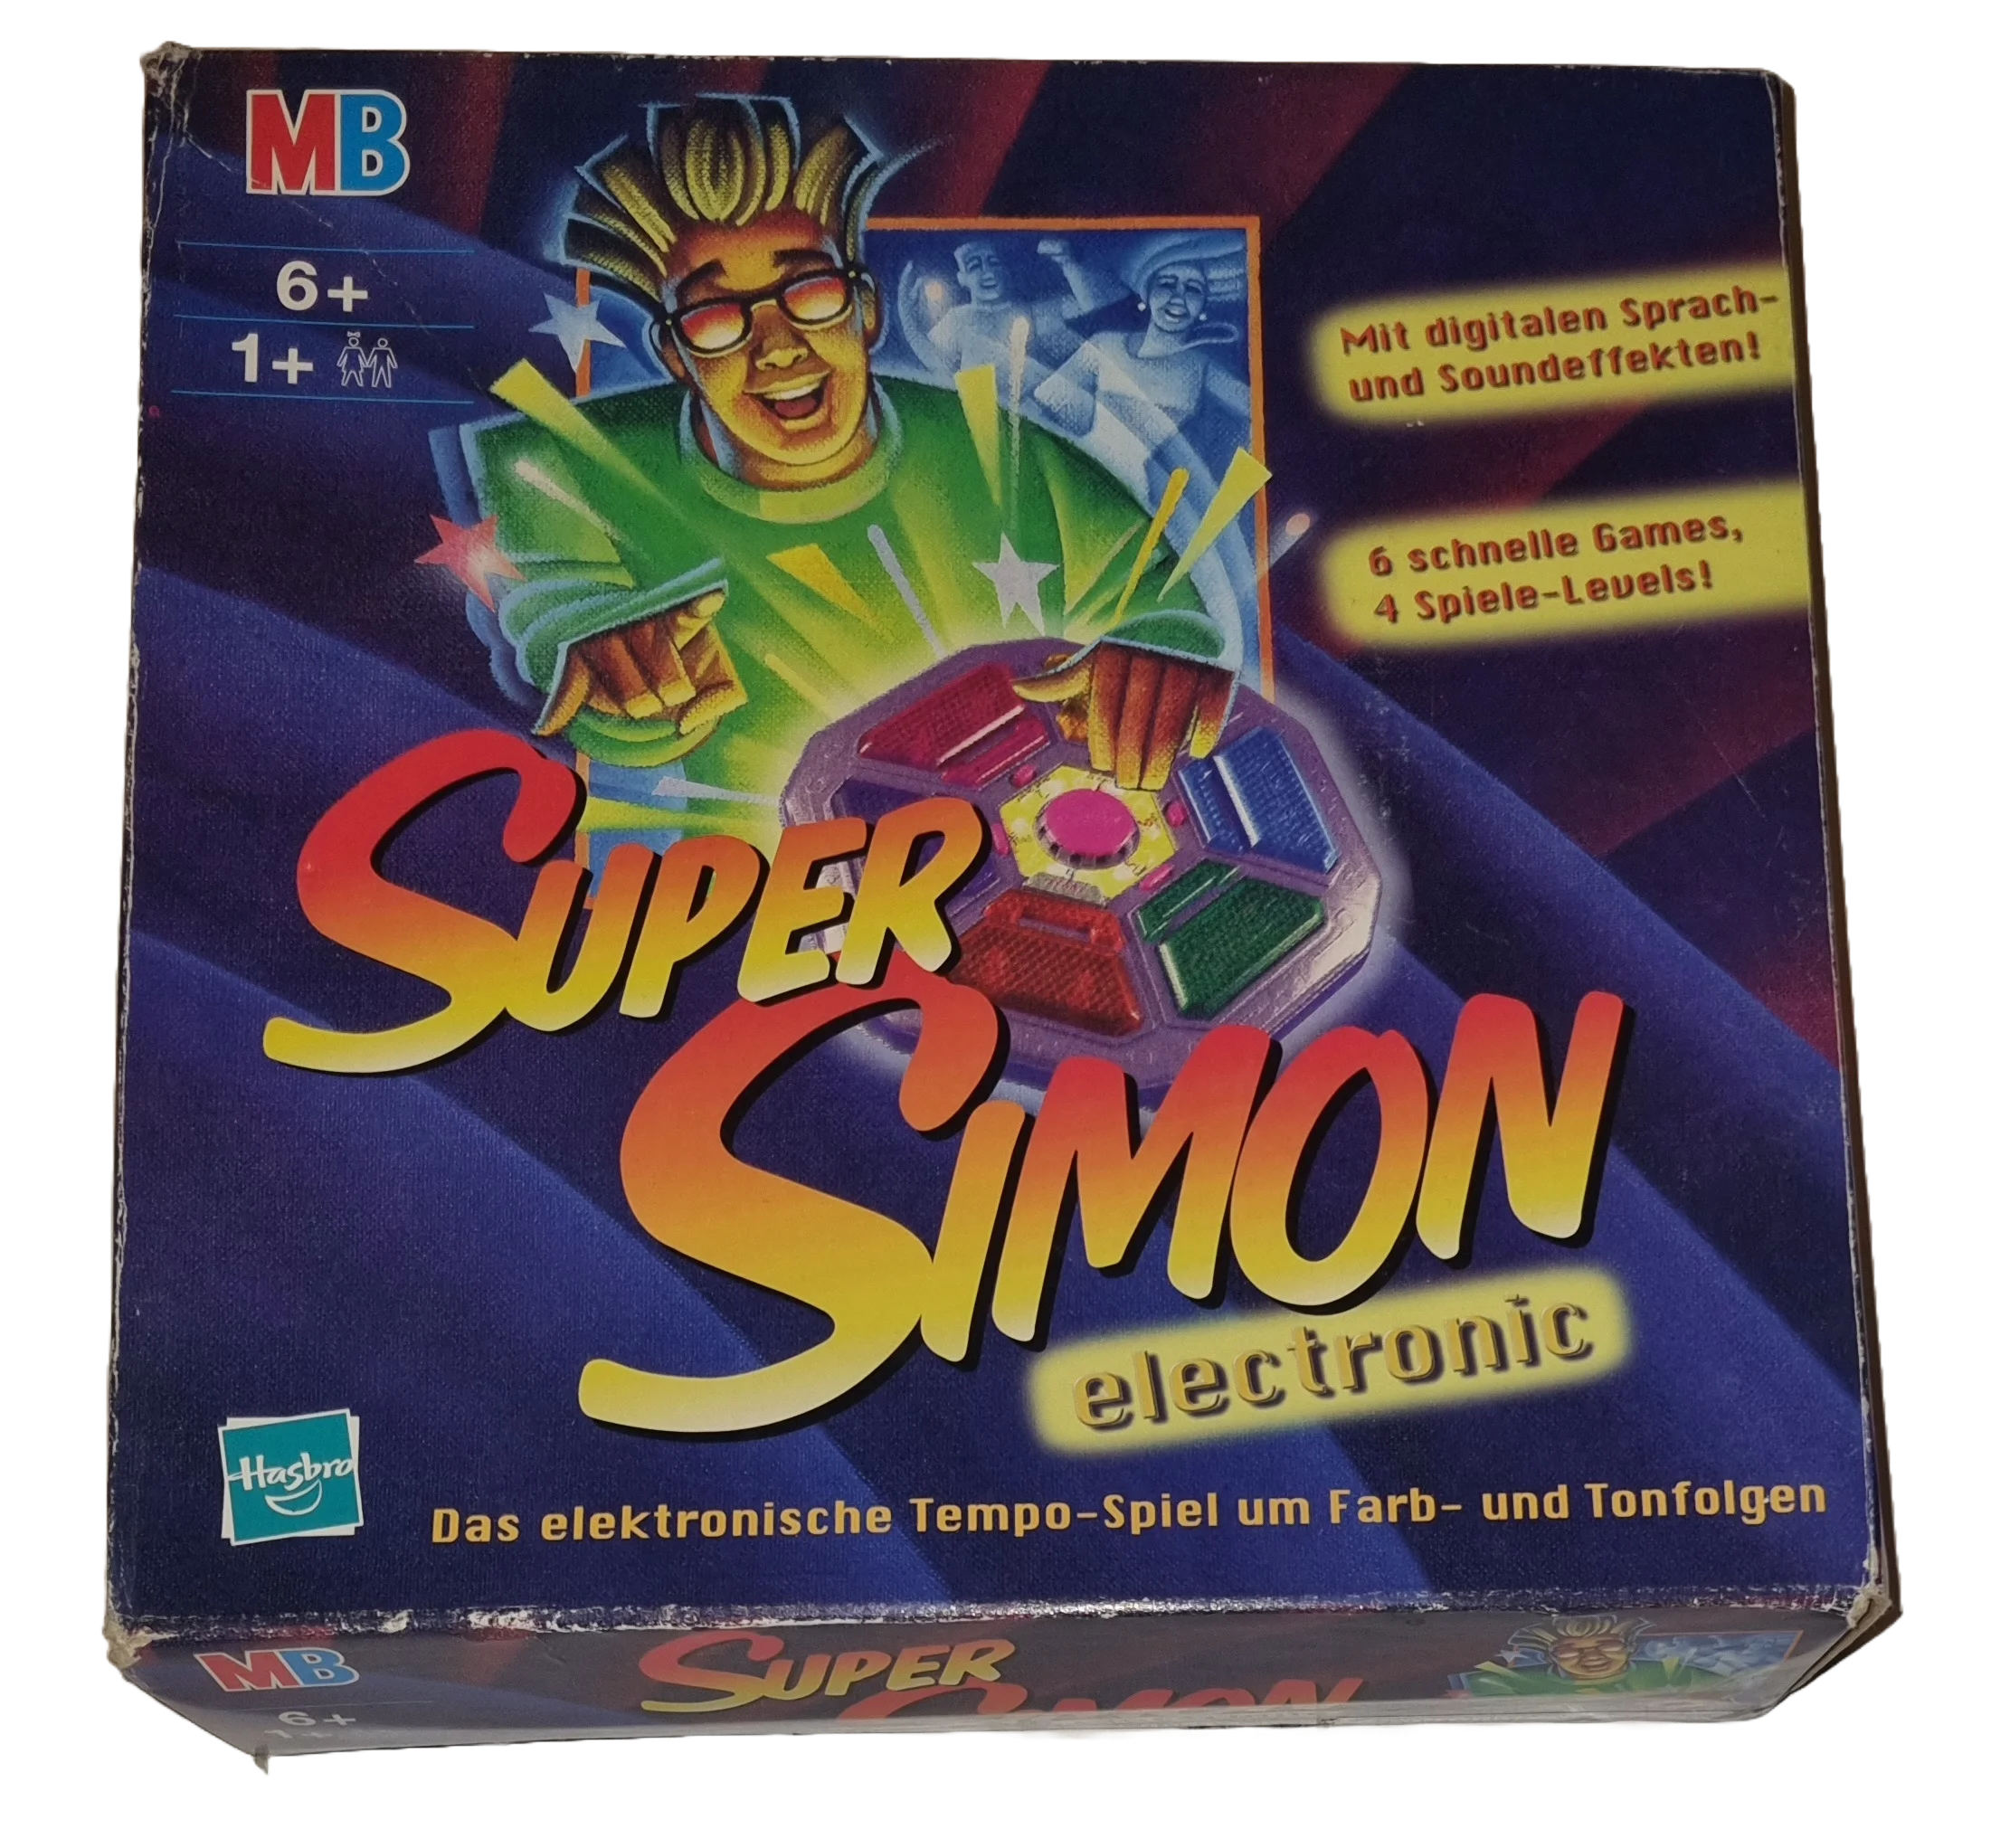 MB Super Simon electronic